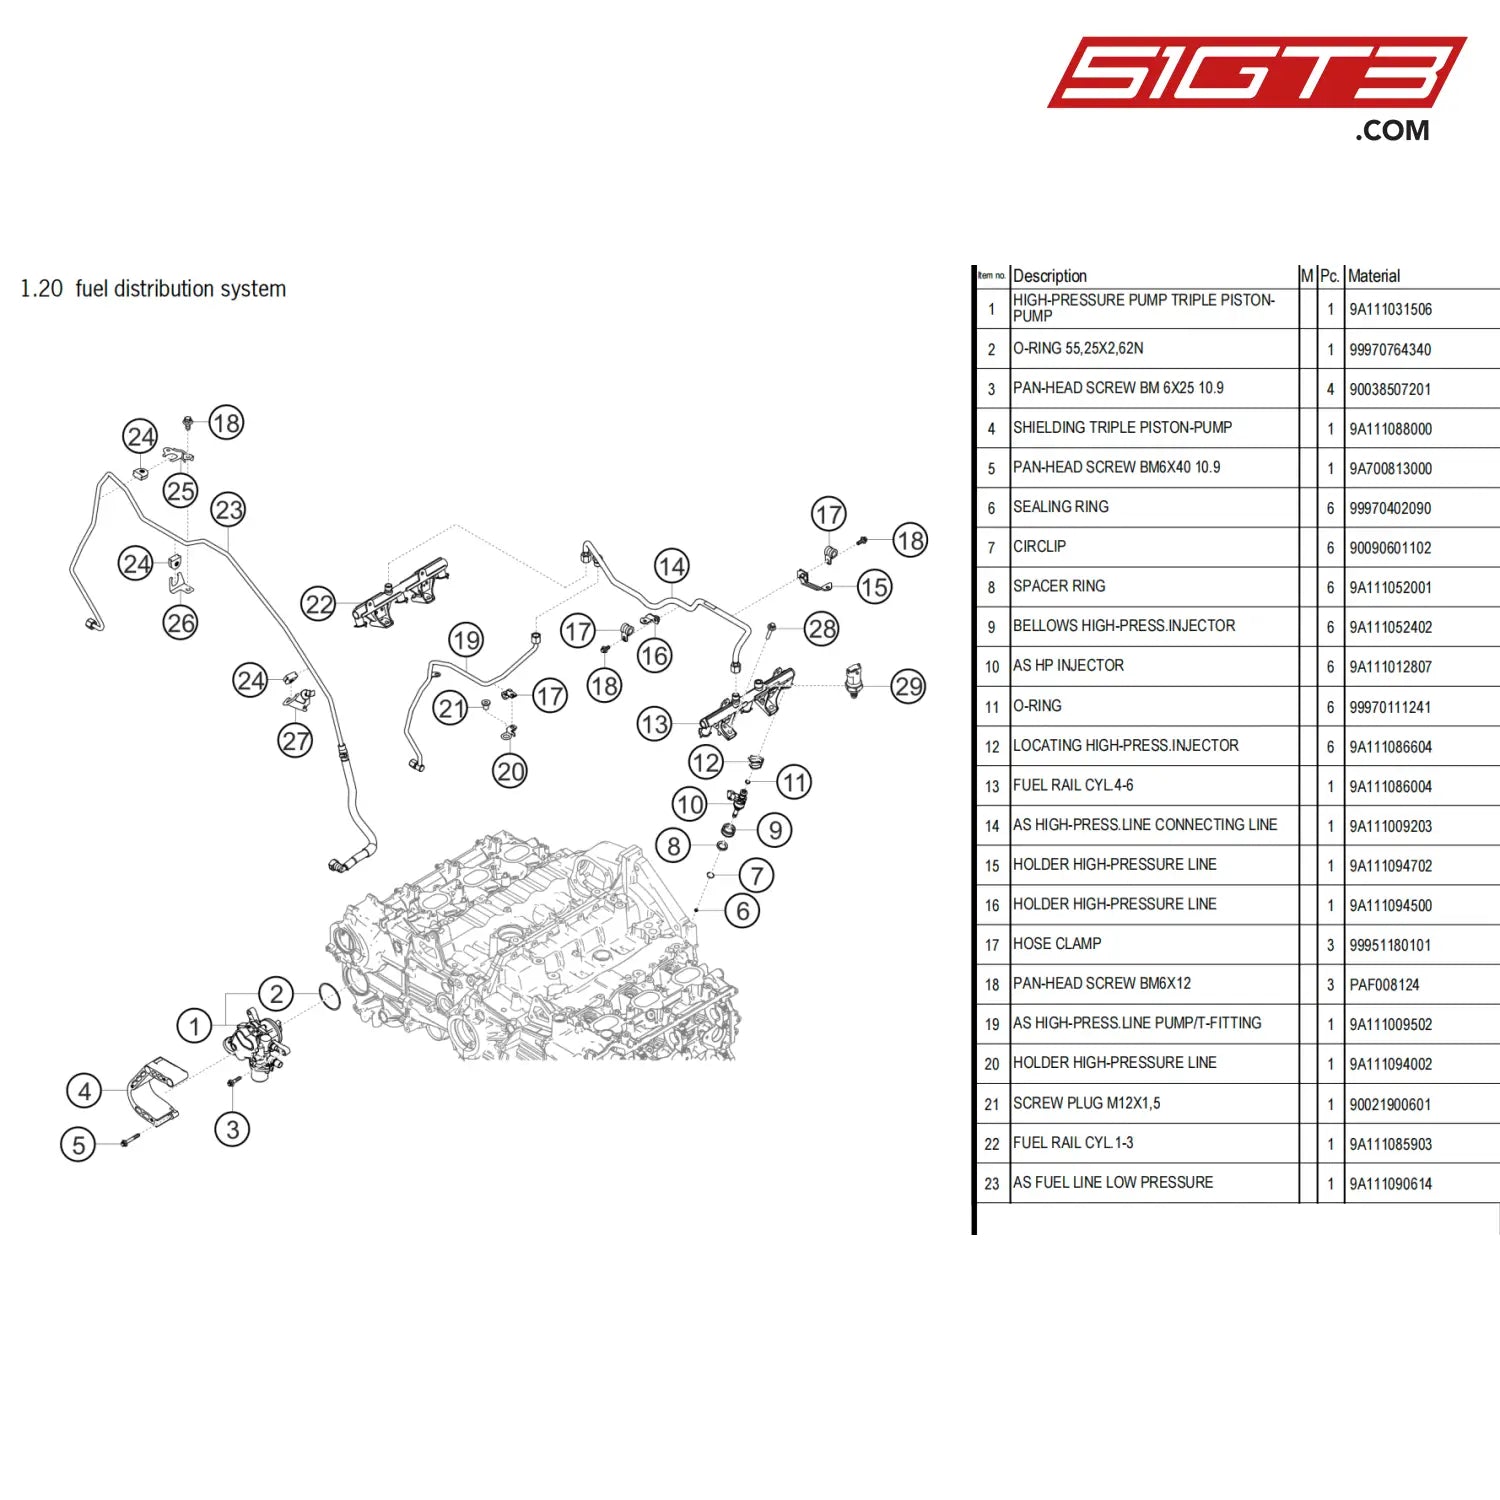 As Fuel Line Low Pressure - 9A111090614 [Porsche 718 Cayman Gt4 Clubsport] Fuel Distribution System